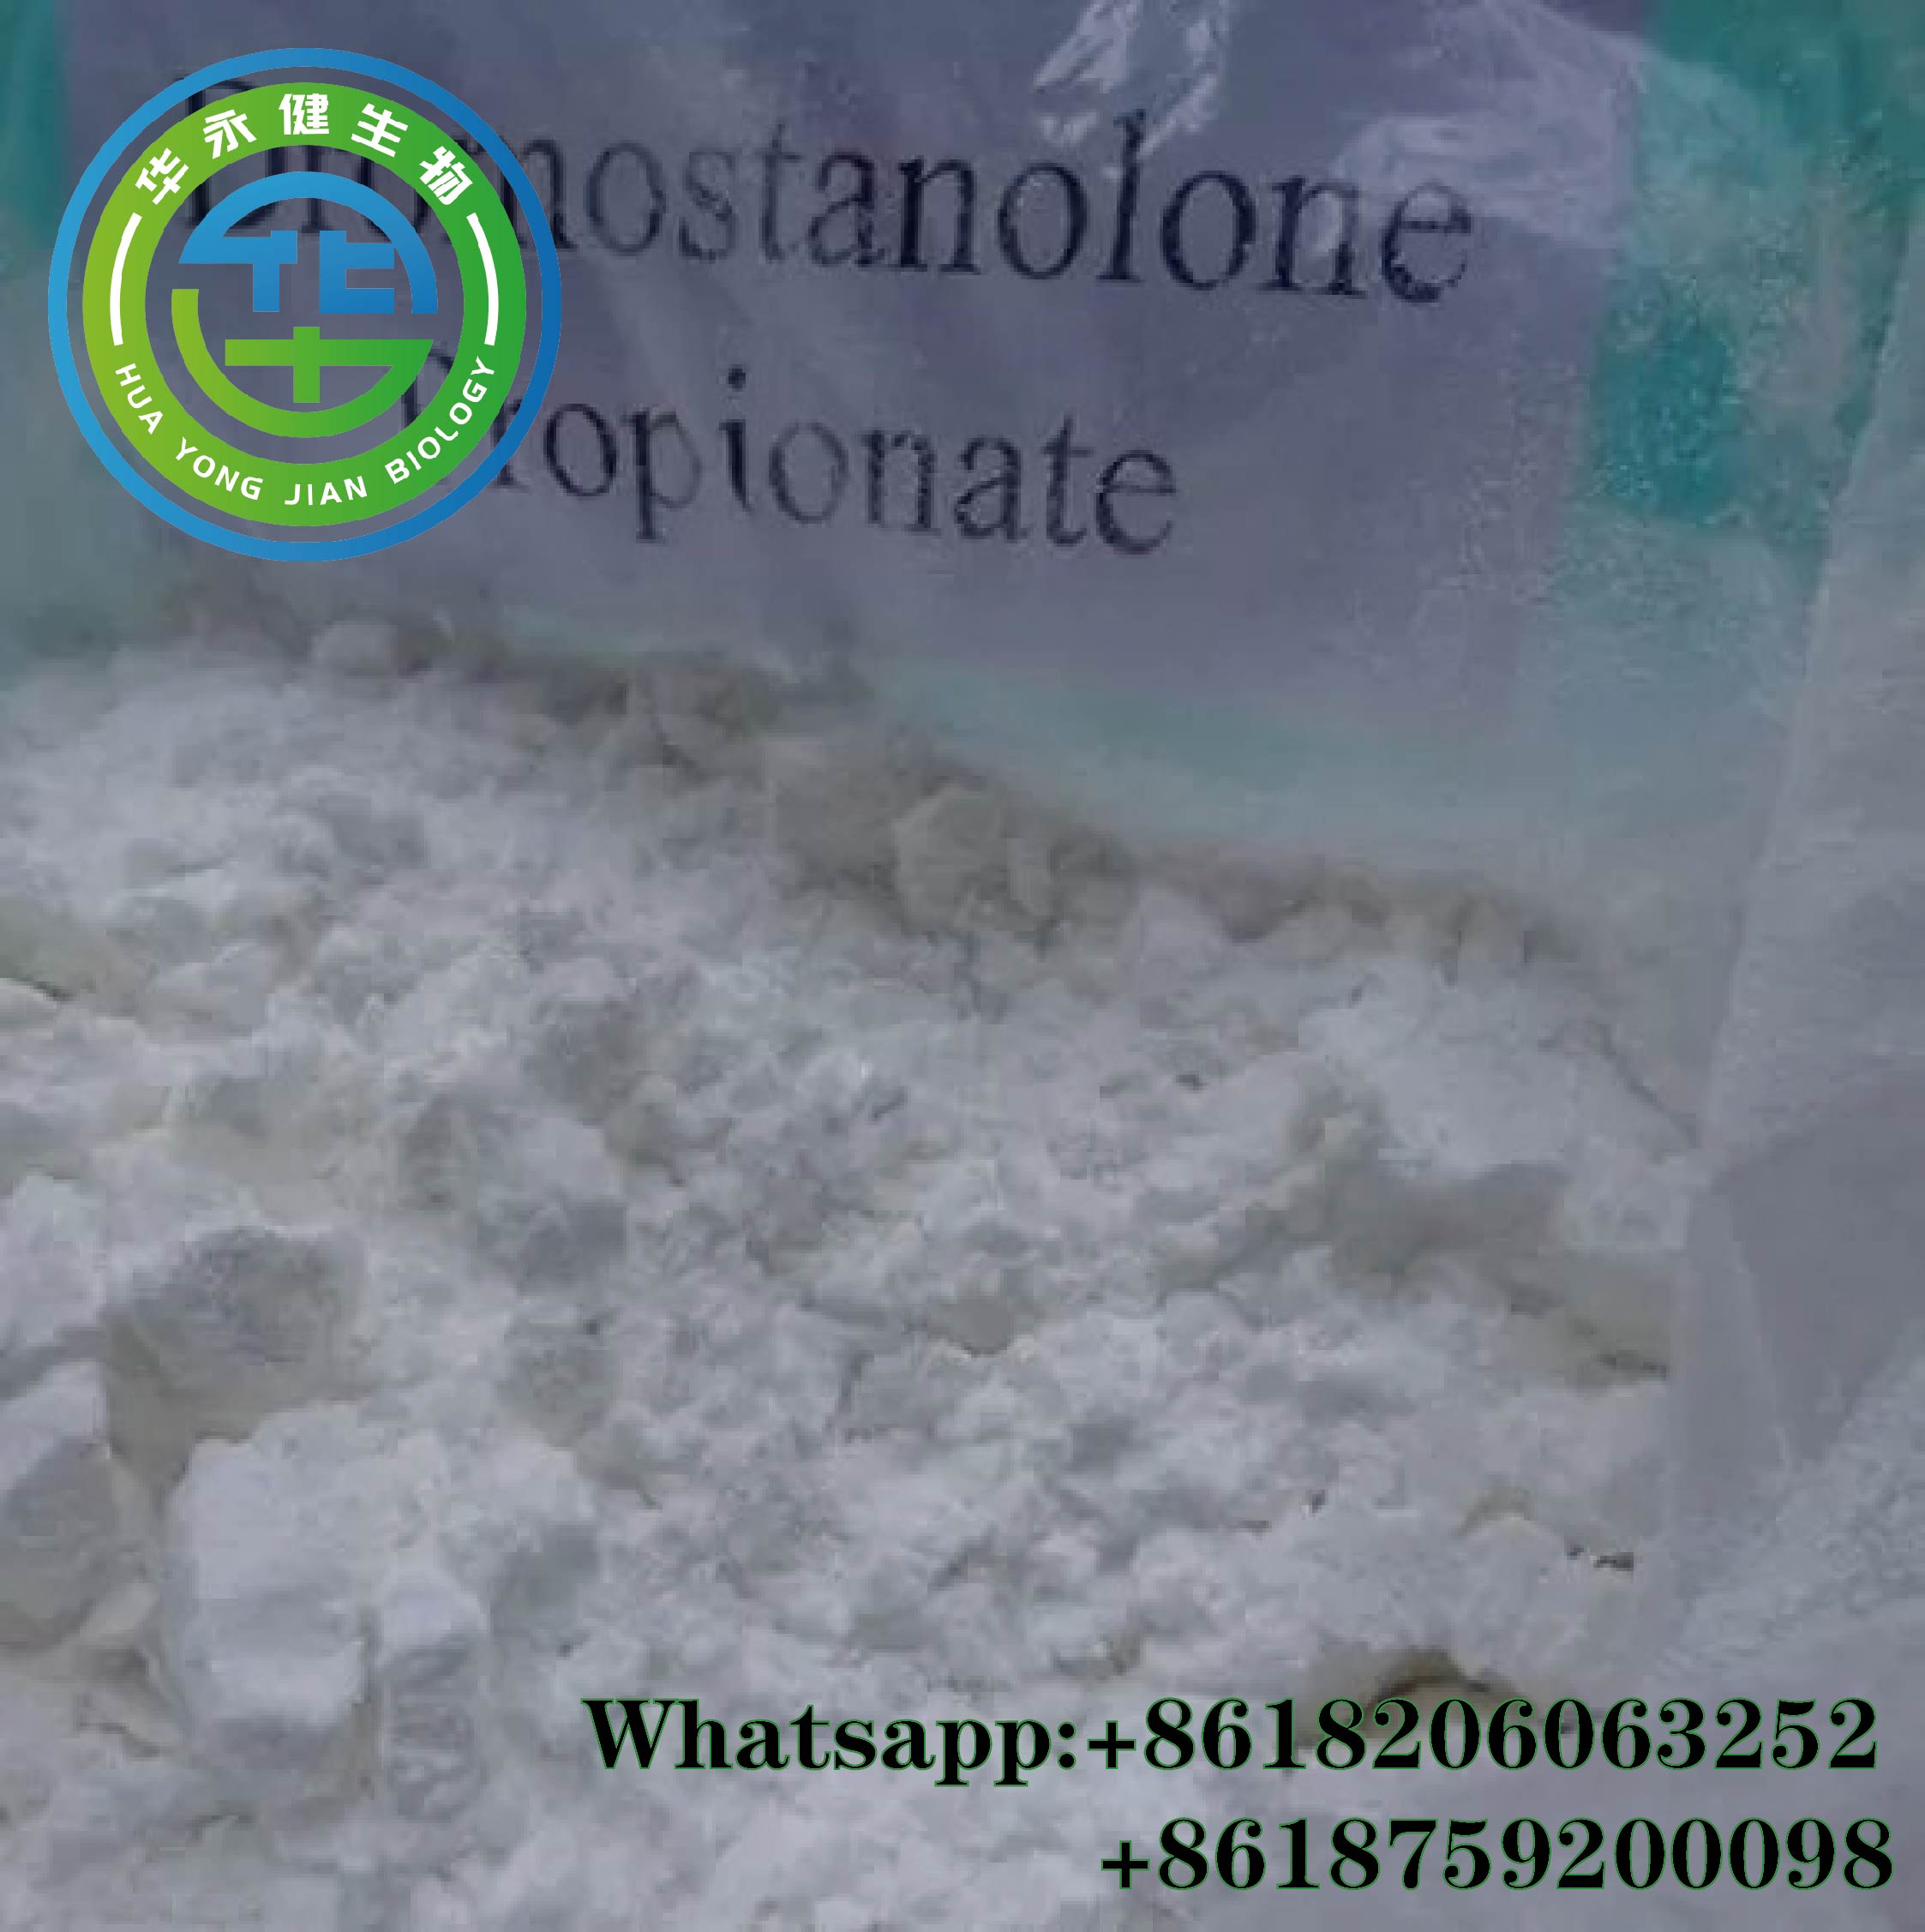 99% Purity Masteron Steroid Anti Estrogen Drostanolone Propionate Powder Masteron P CasNO.521-12-0